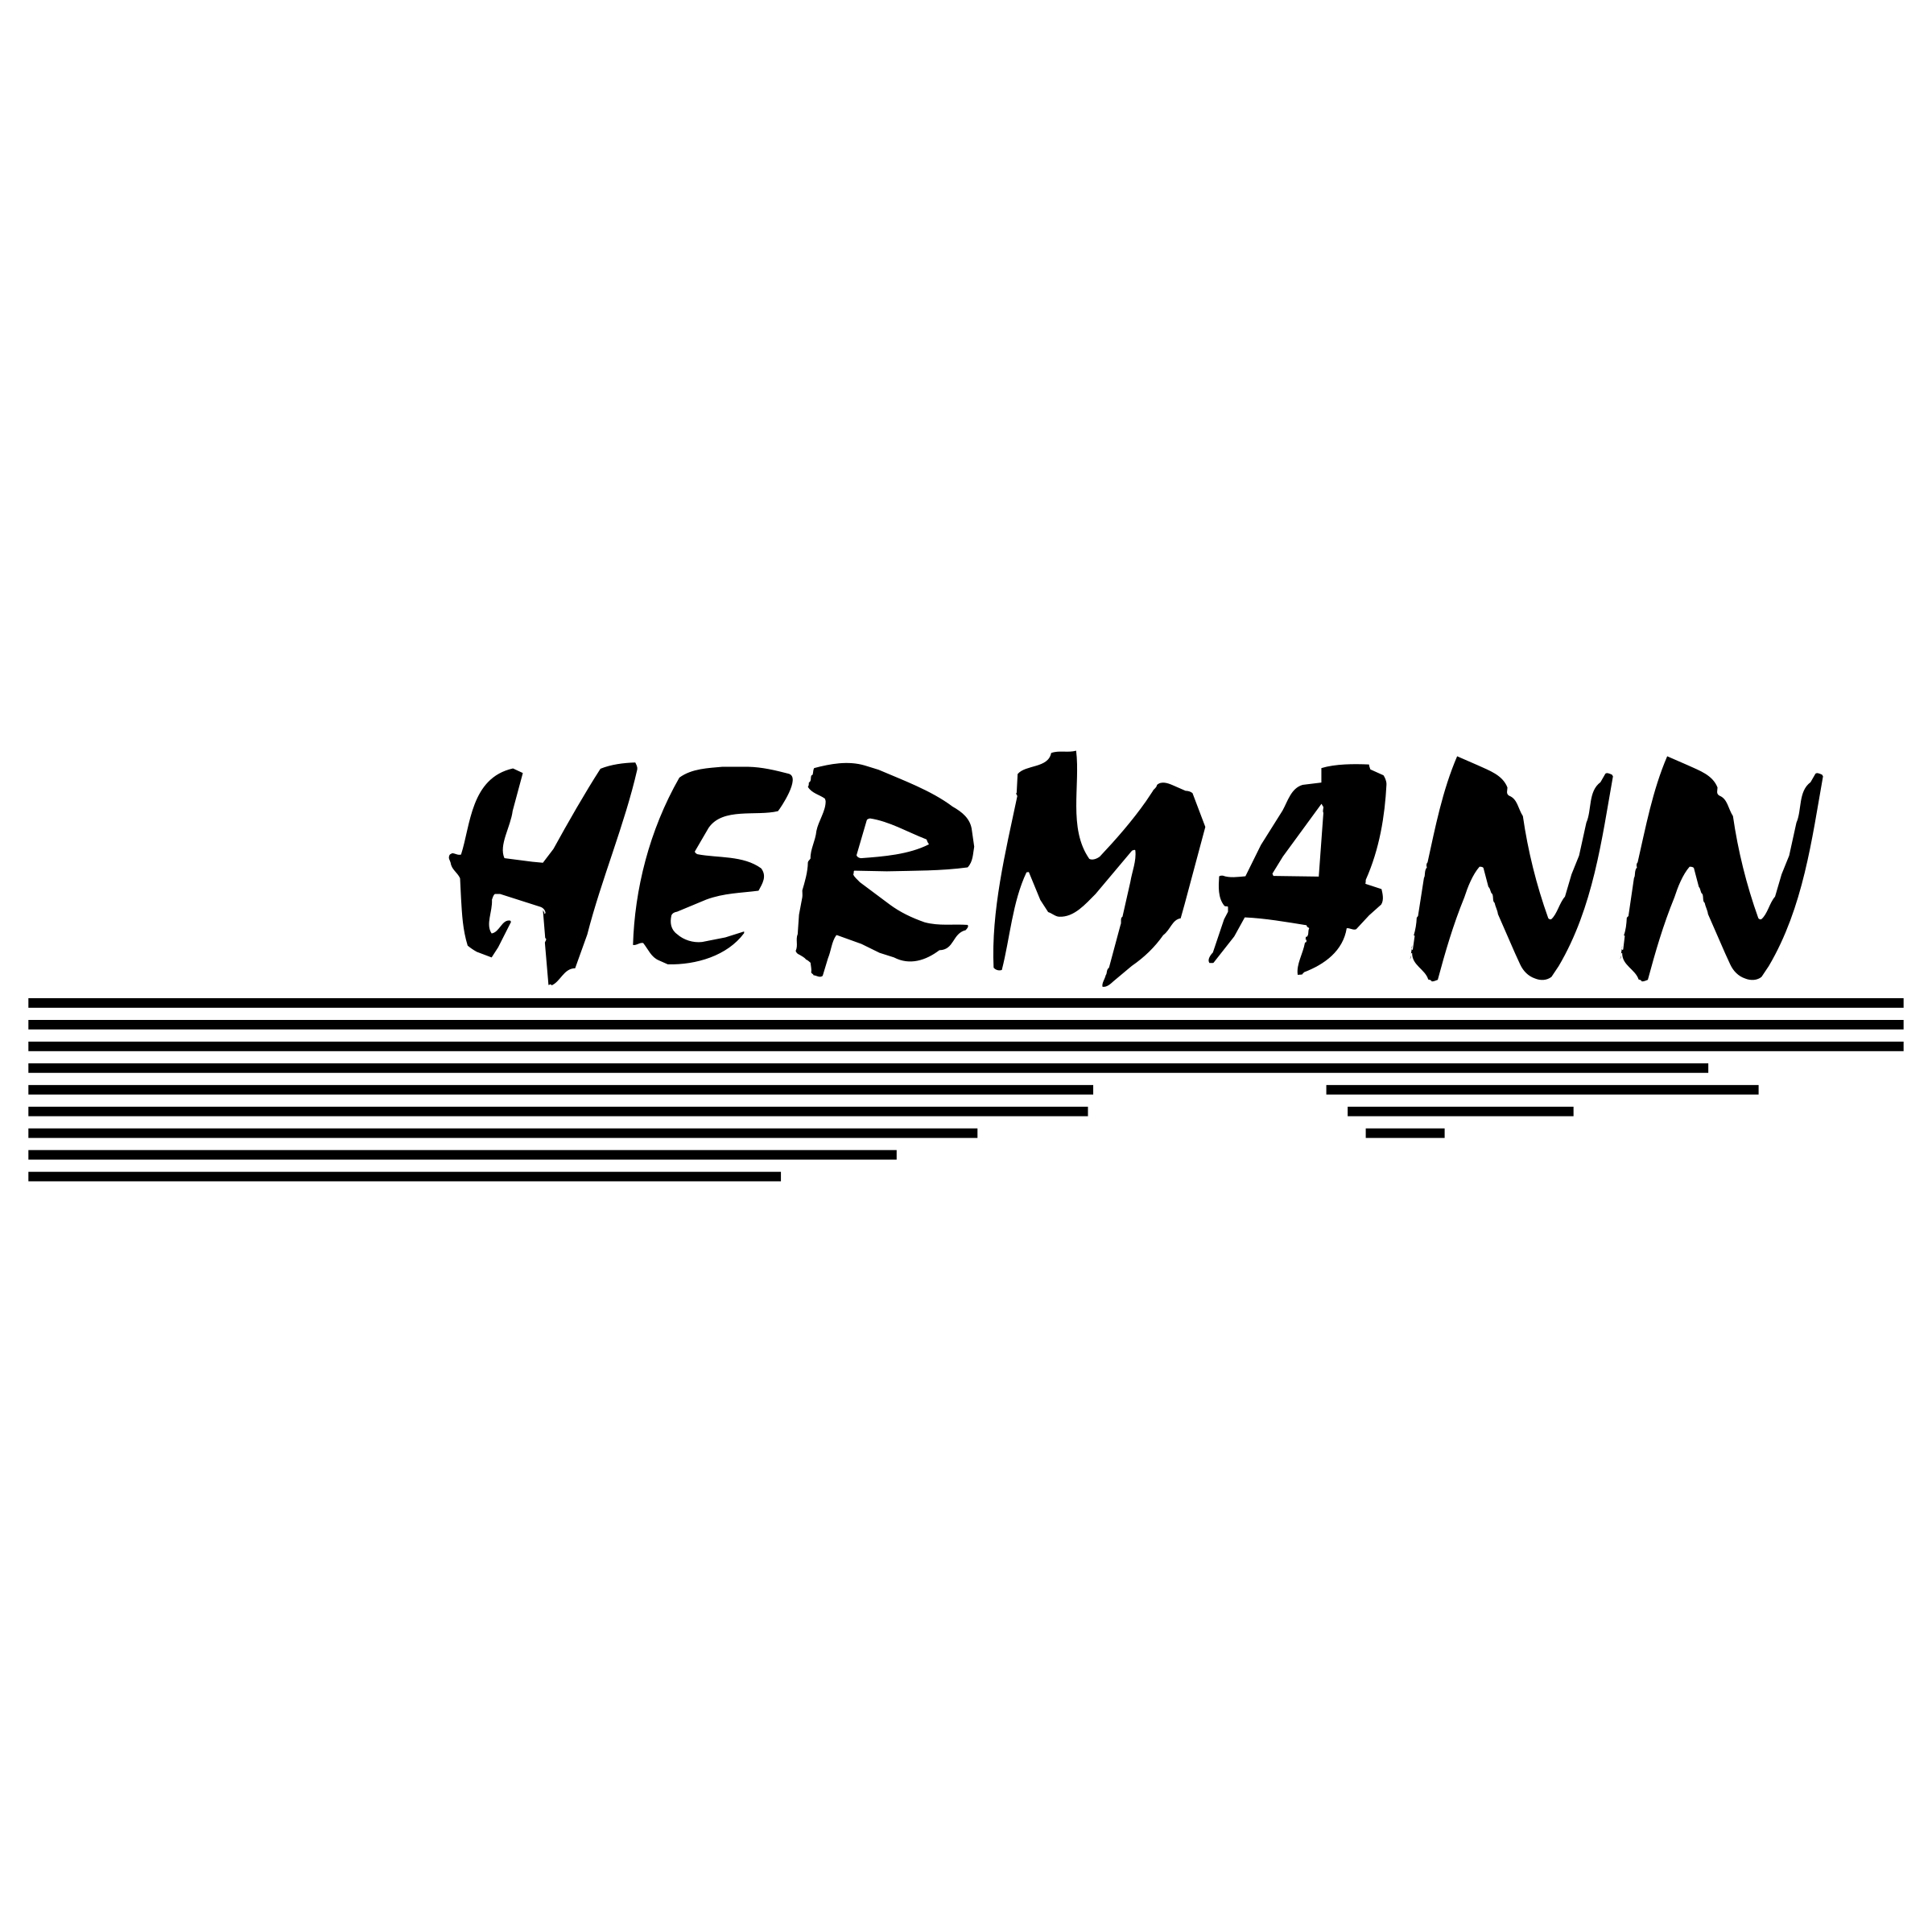 Herman Logo - Herman Logo PNG Transparent & SVG Vector